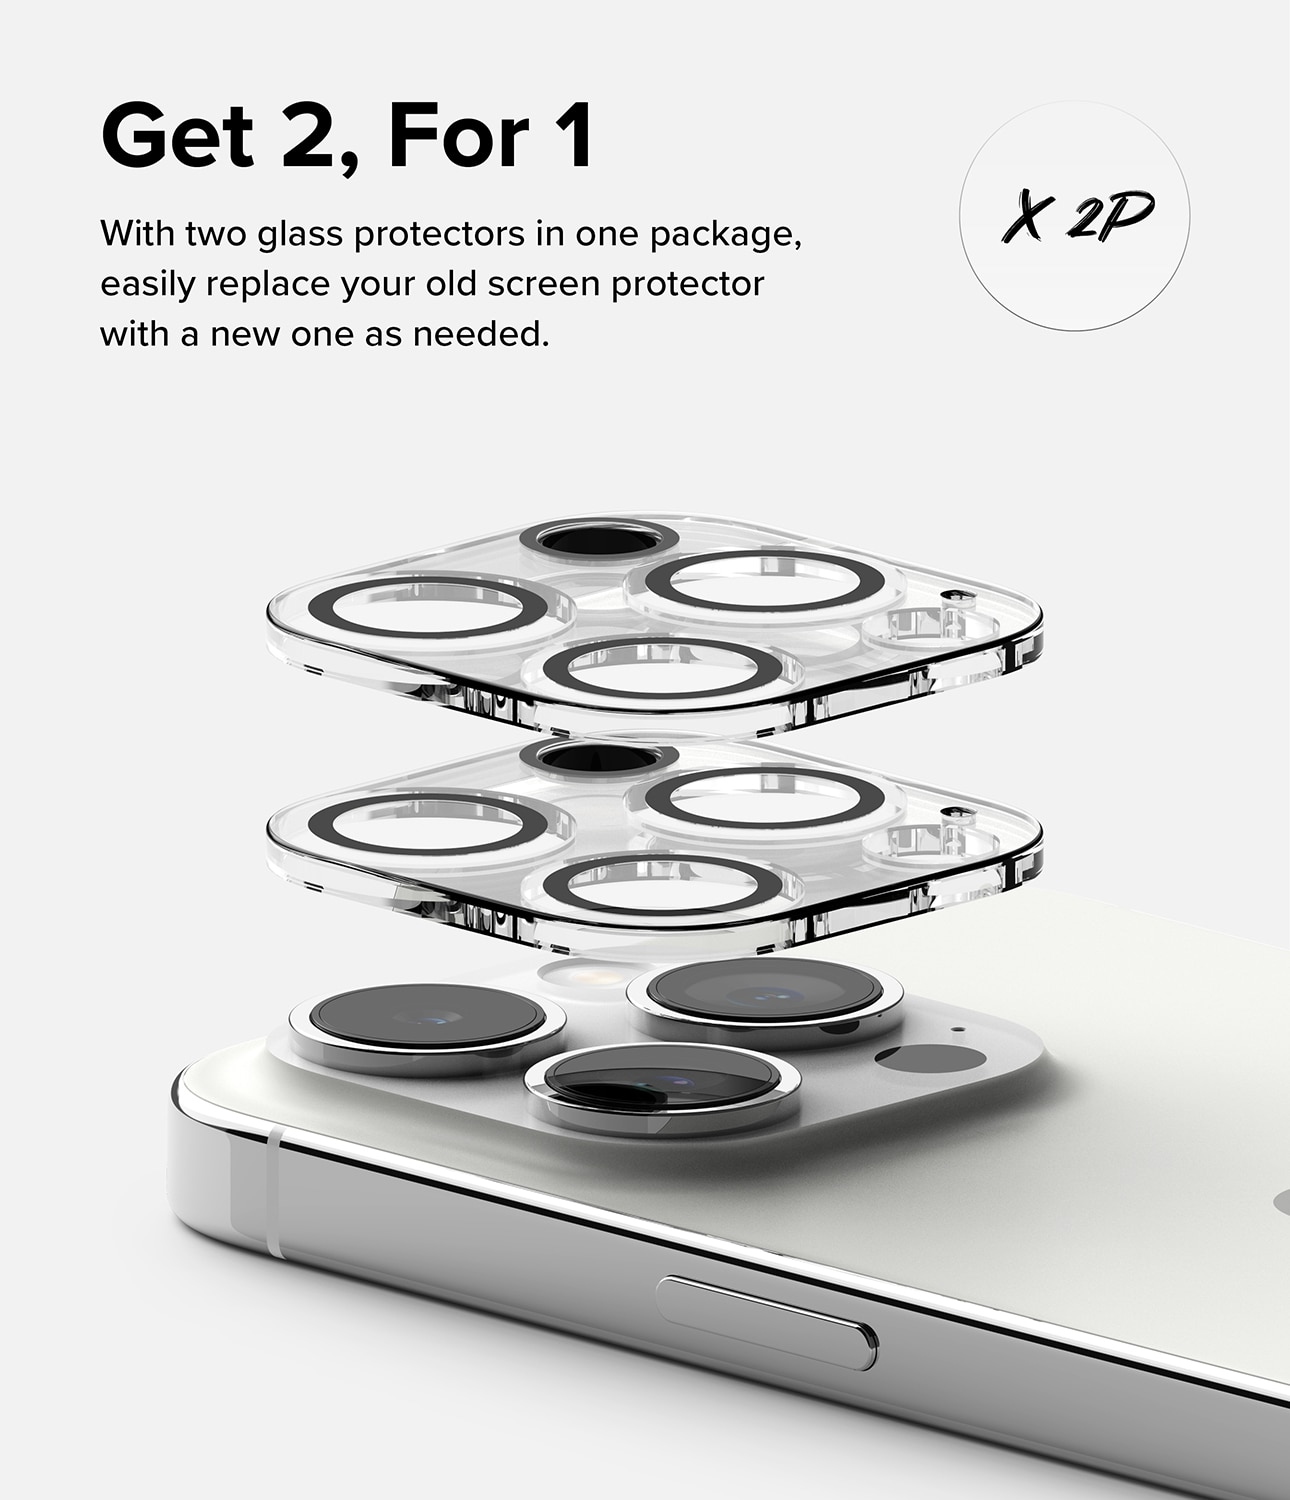 Camera Protector Glass (2 pièces) iPhone 15 Pro Max Transparent